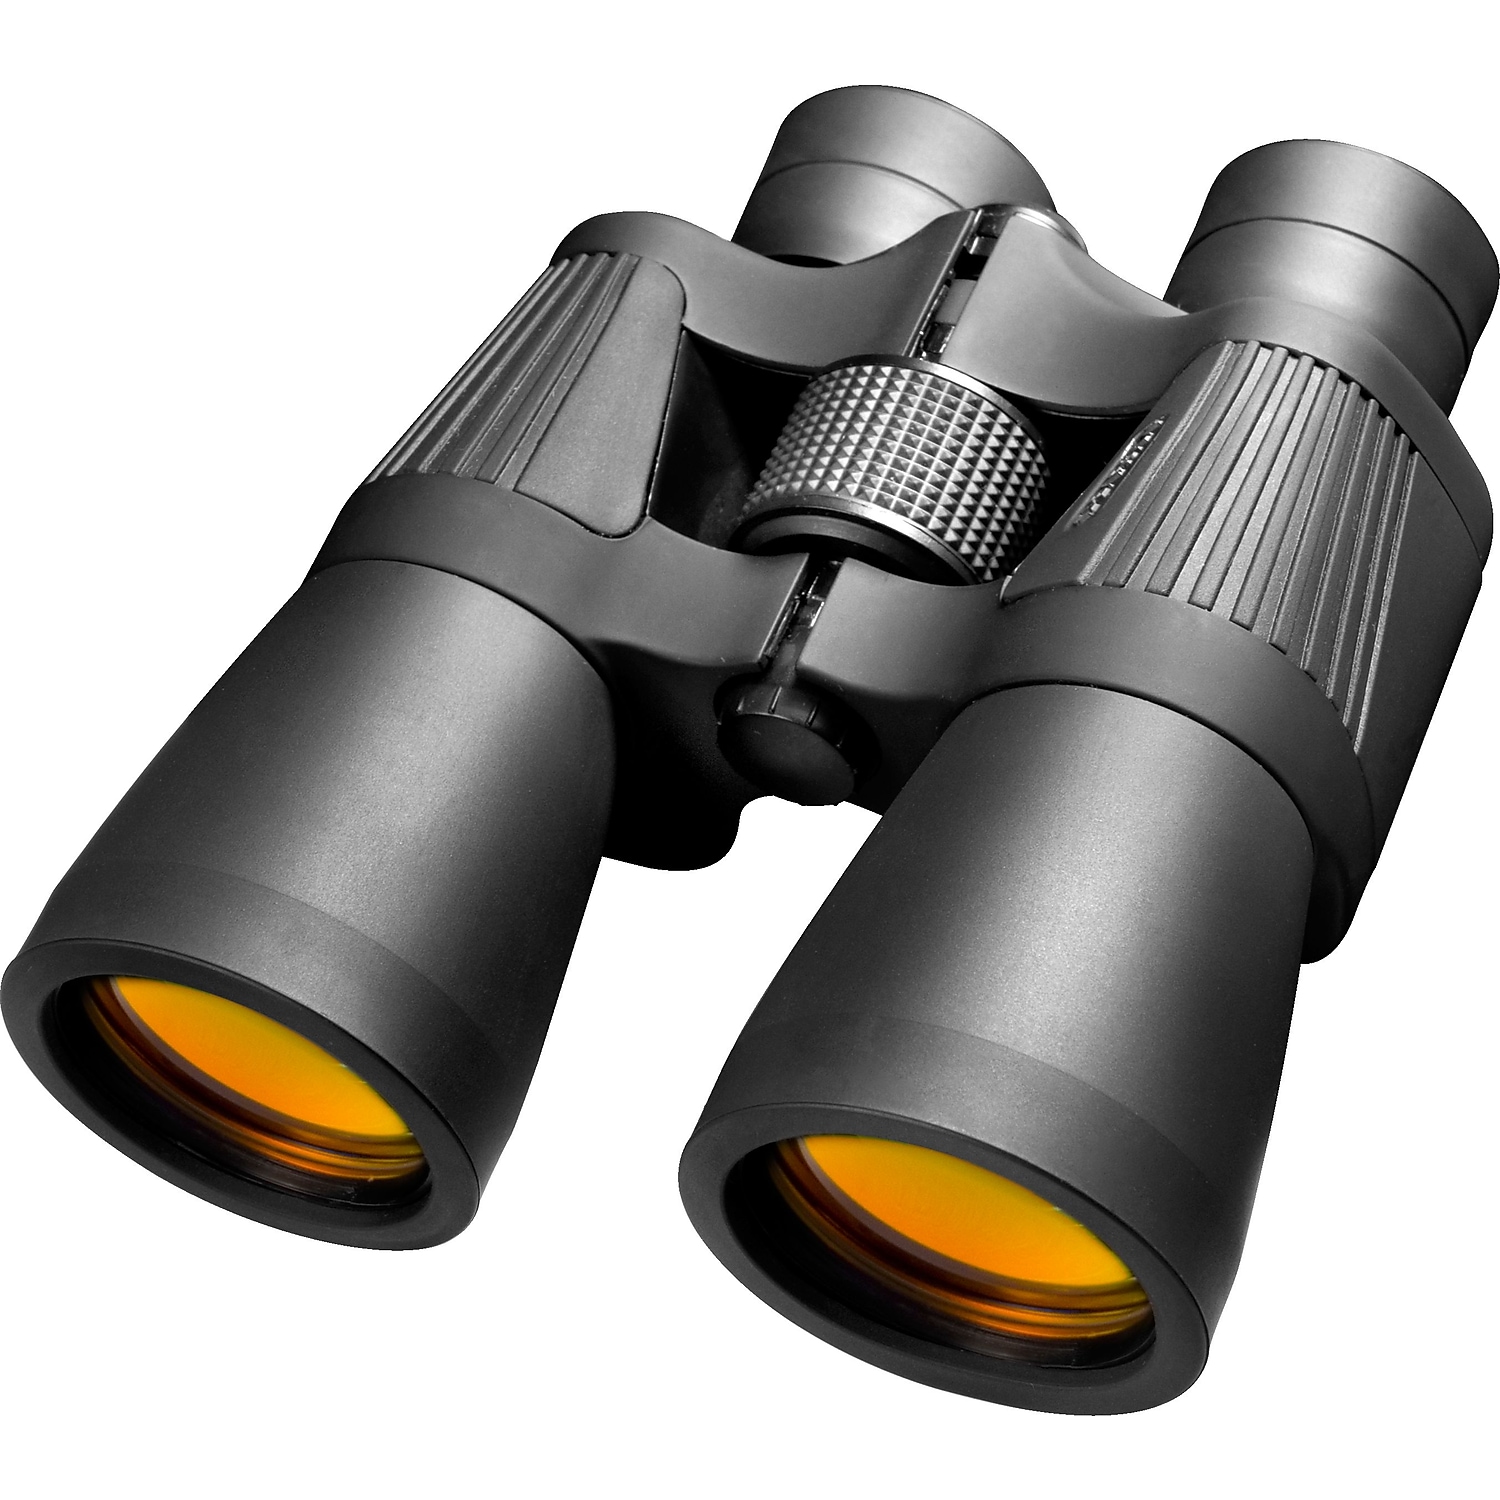 Barska 10x50 x-Trail Binoculars (AB10176) - image 1 of 2